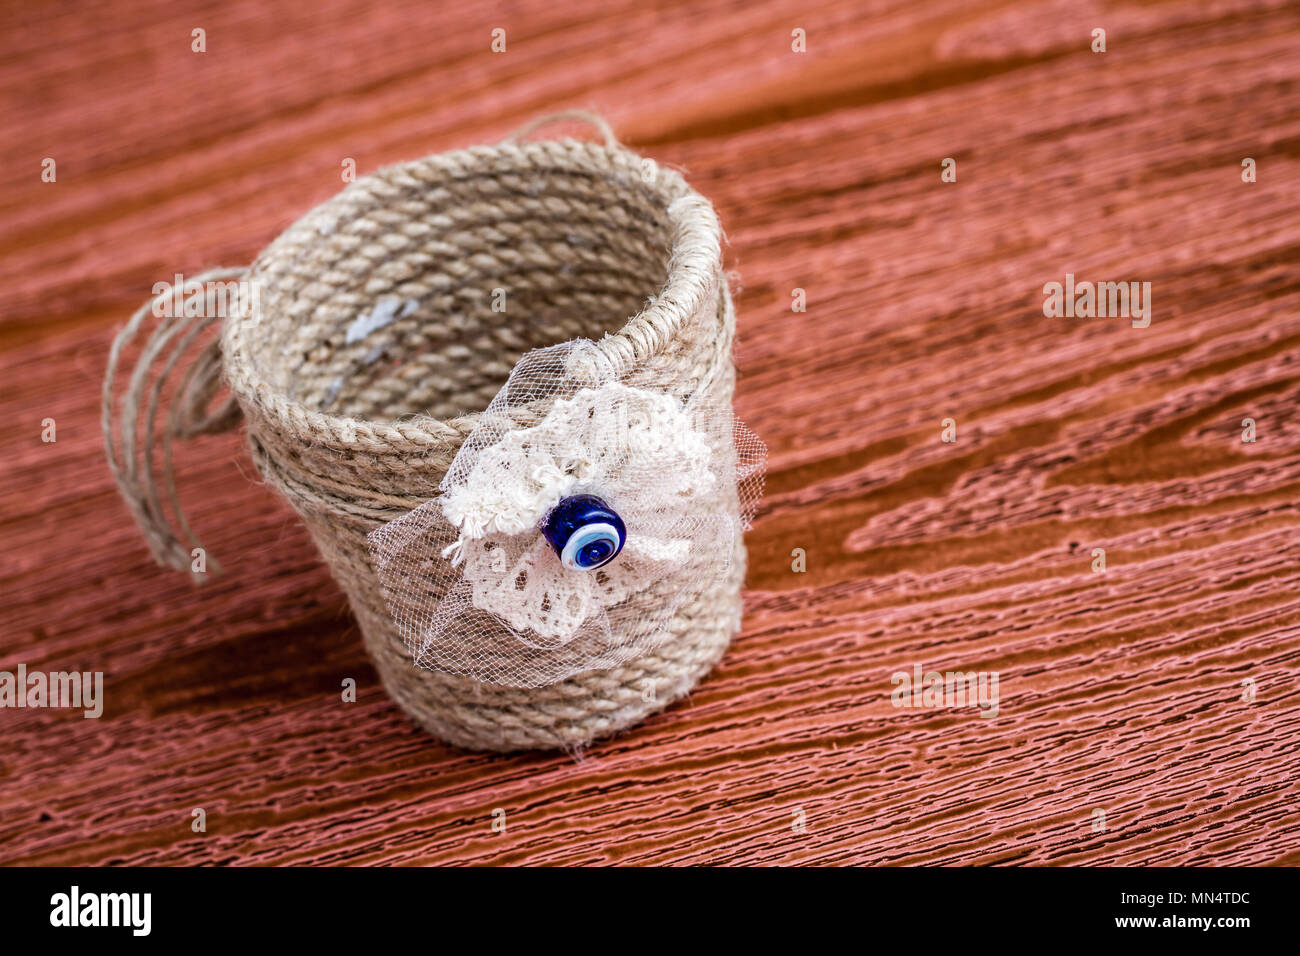 https://c8.alamy.com/comp/MN4TDC/handmade-dekoratif-basket-made-of-thick-jute-rope-on-wooden-background-MN4TDC.jpg